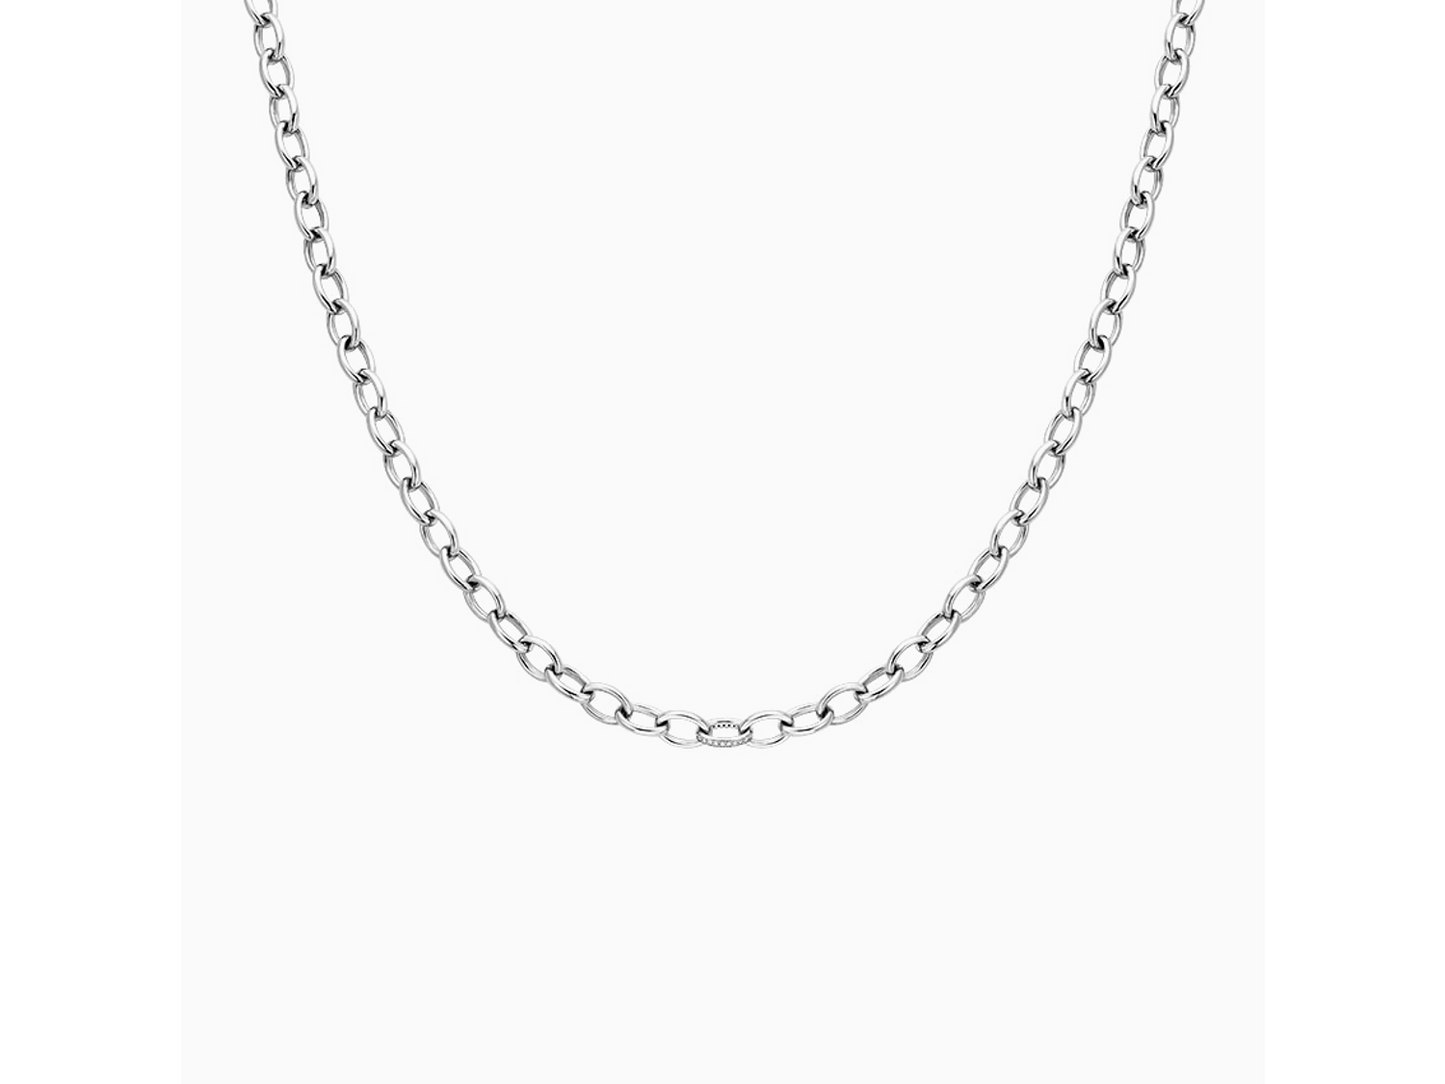 Dazzling Silver Diamond Link Necklace Adjustable Length